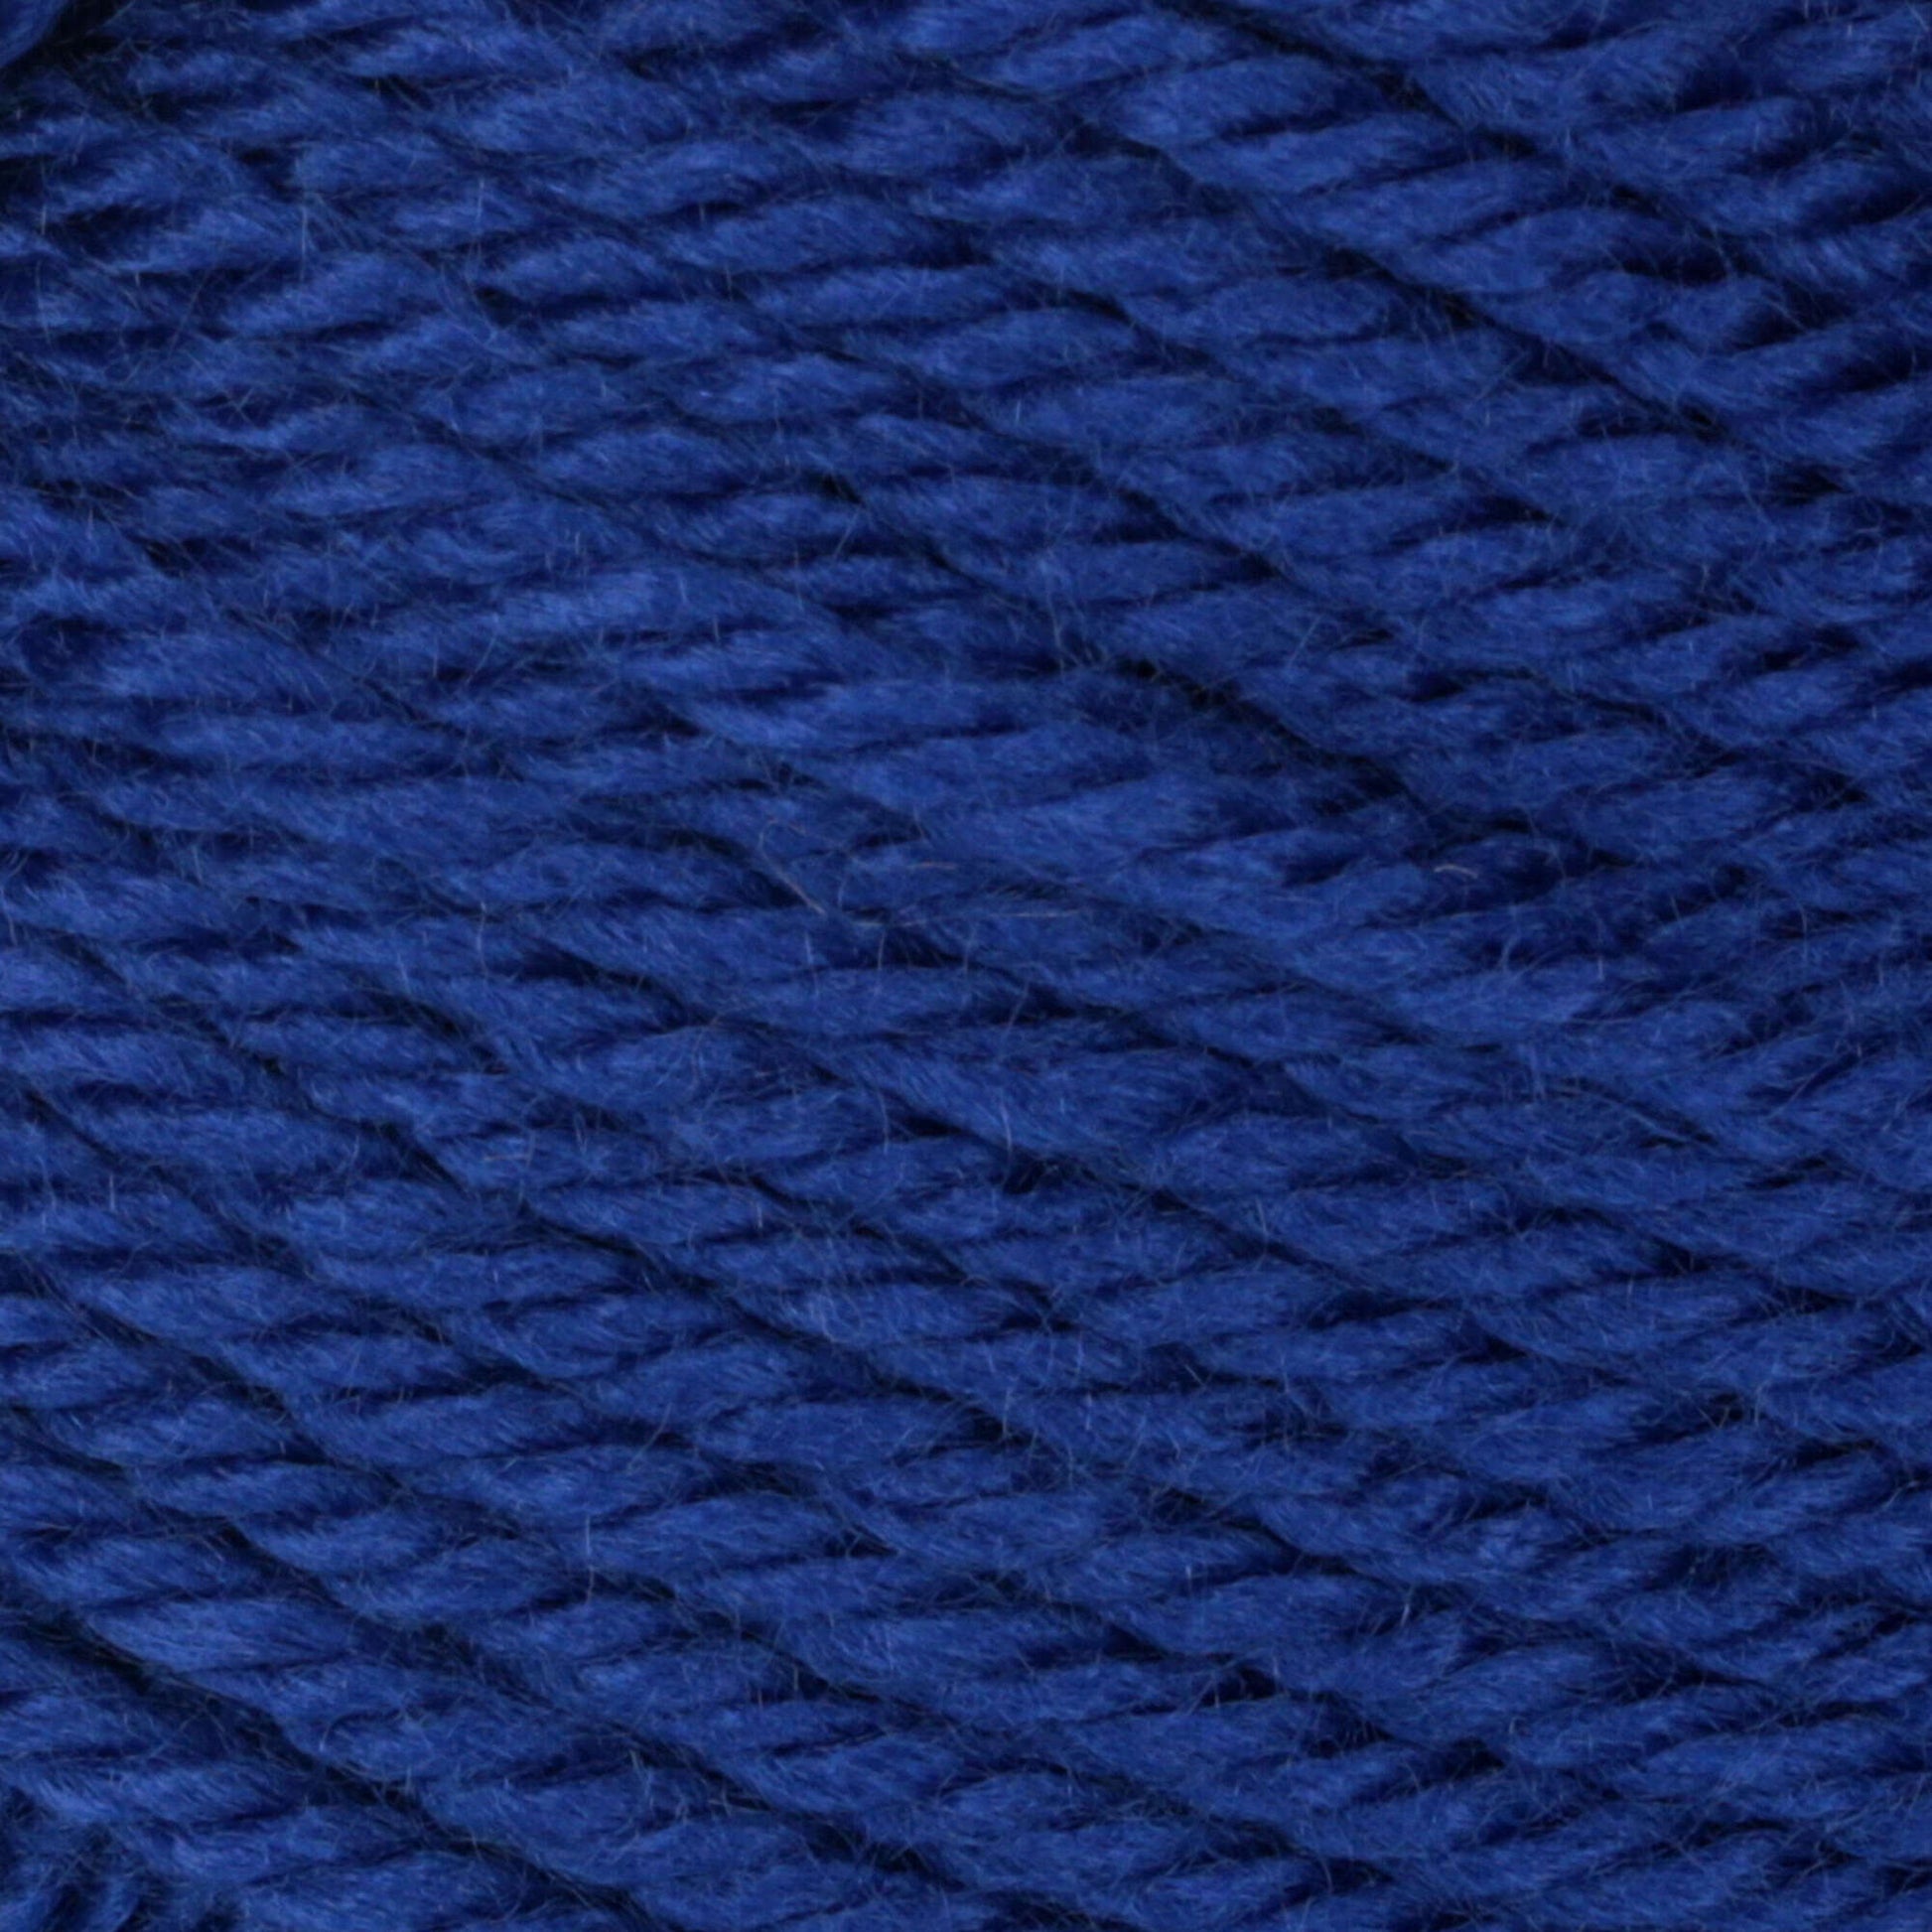 Patons Canadiana Yarn Royal Blue